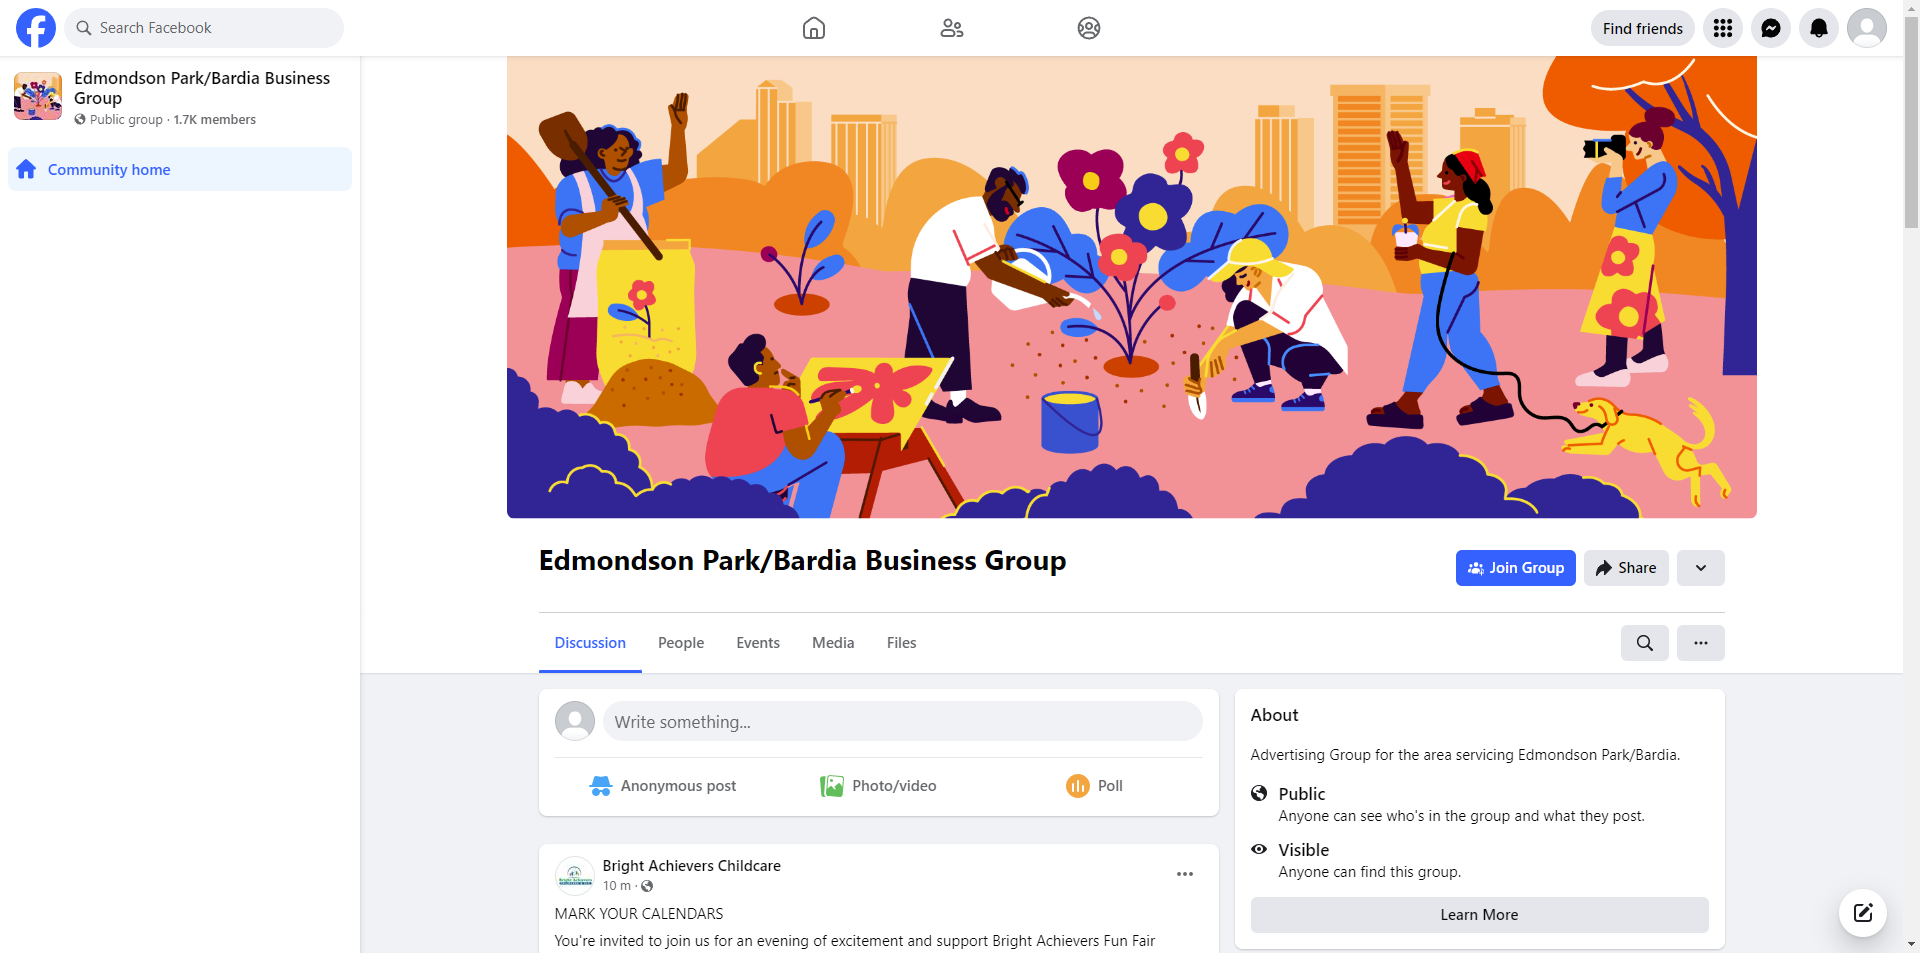 Edmondson Park/Bardia Business Group